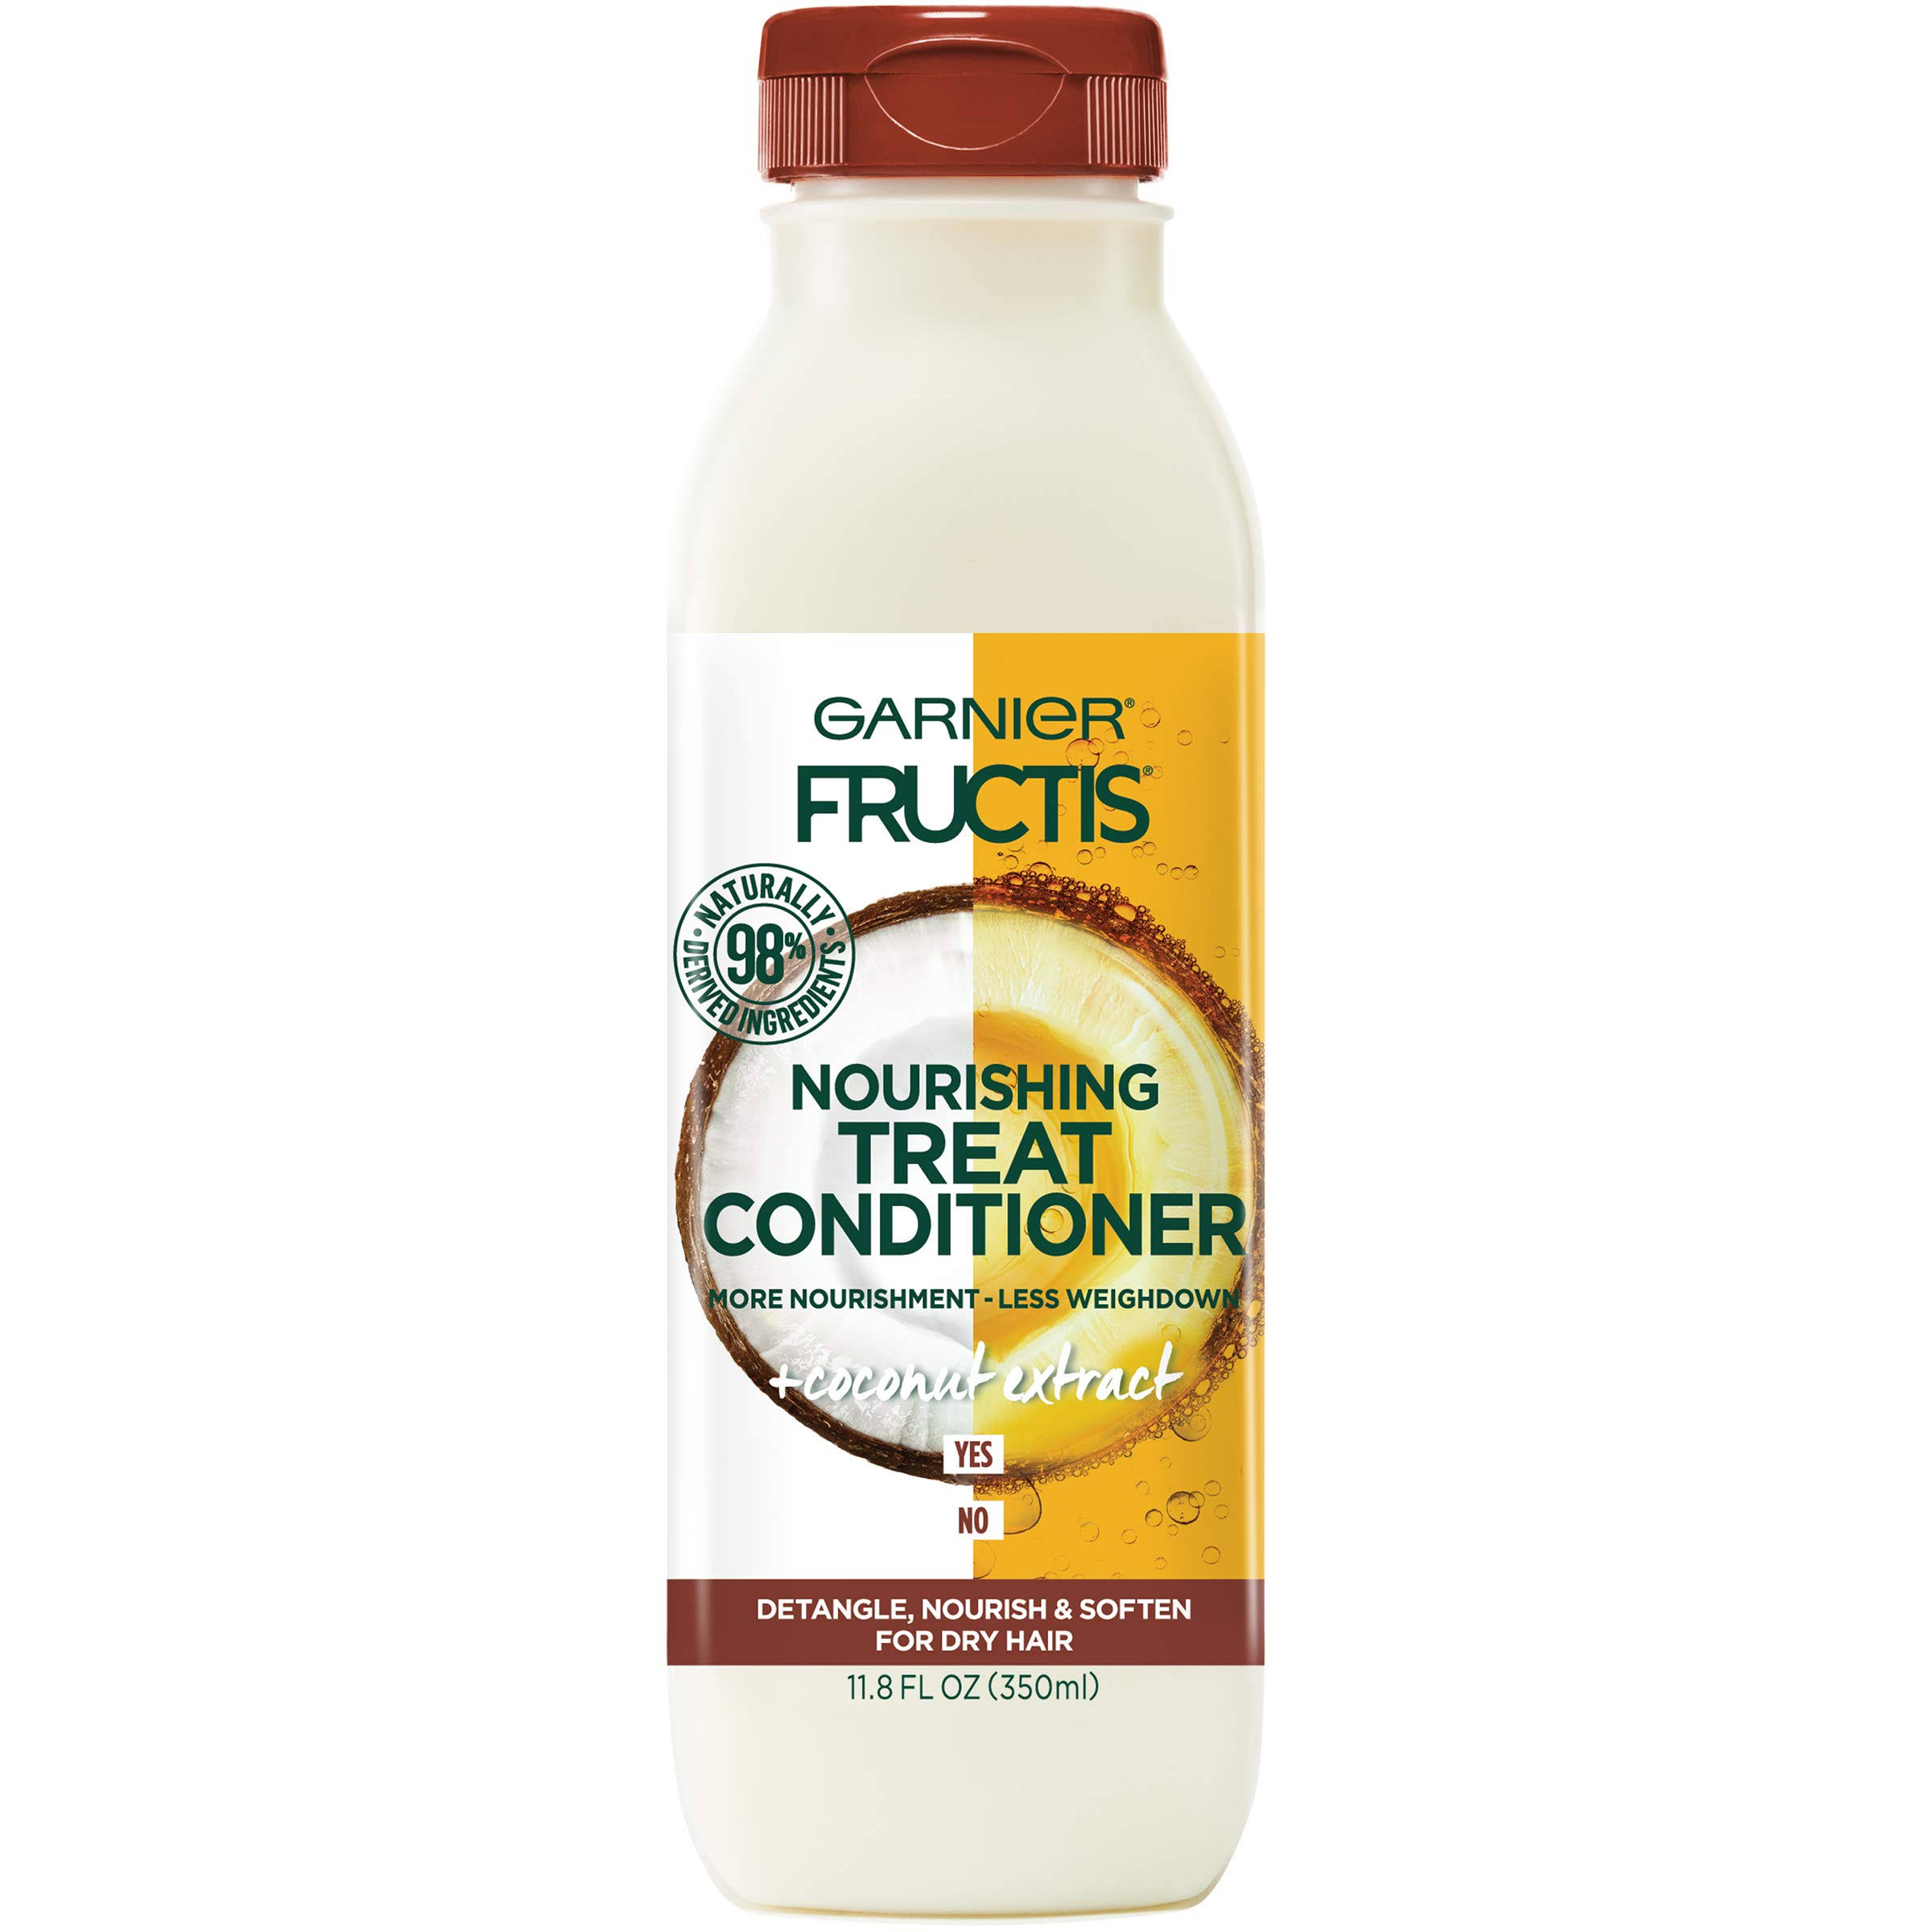 Garnier Fructis Nourishing Treat Conditioner, 98 Percent Naturally der